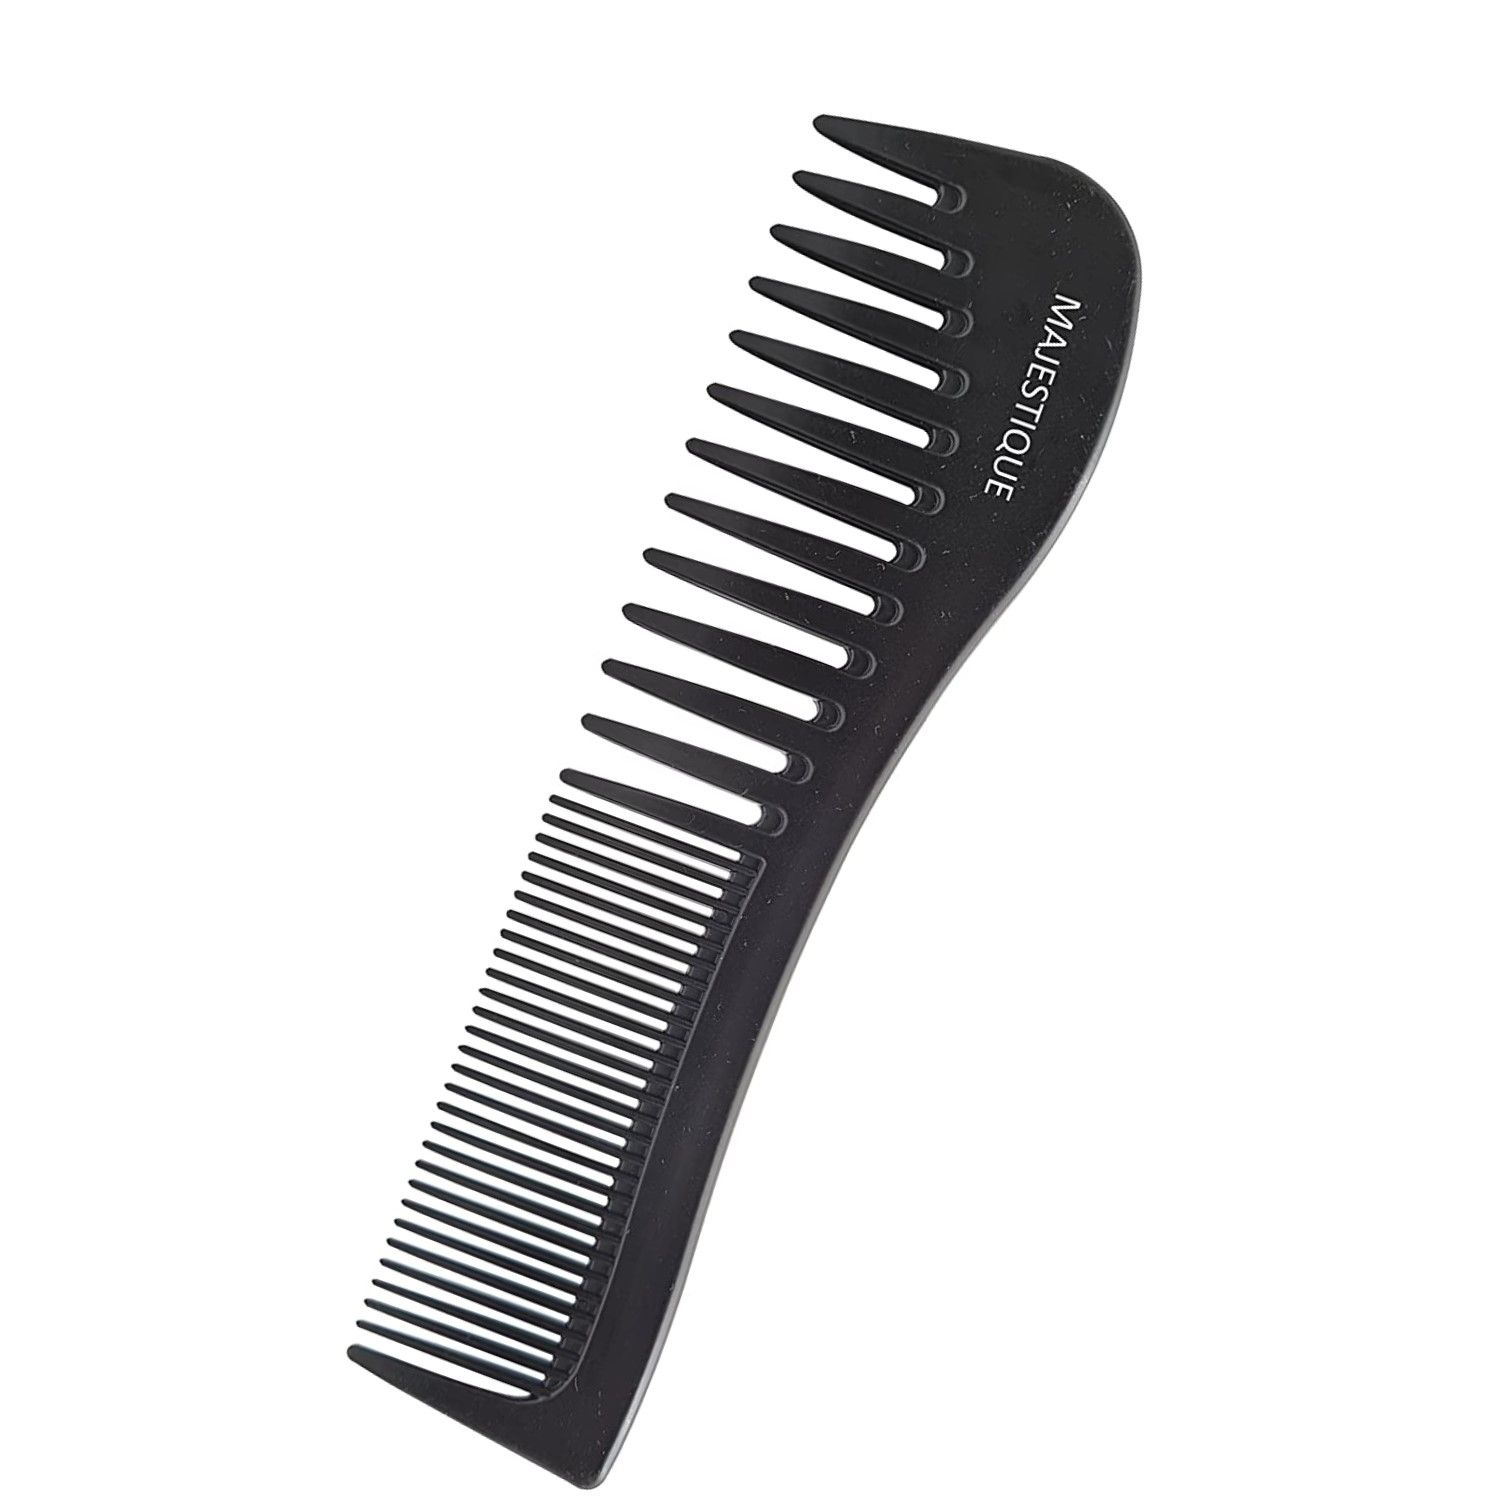 Buy Grooming Comb  HMBC125 at Best Price Online  VEGA